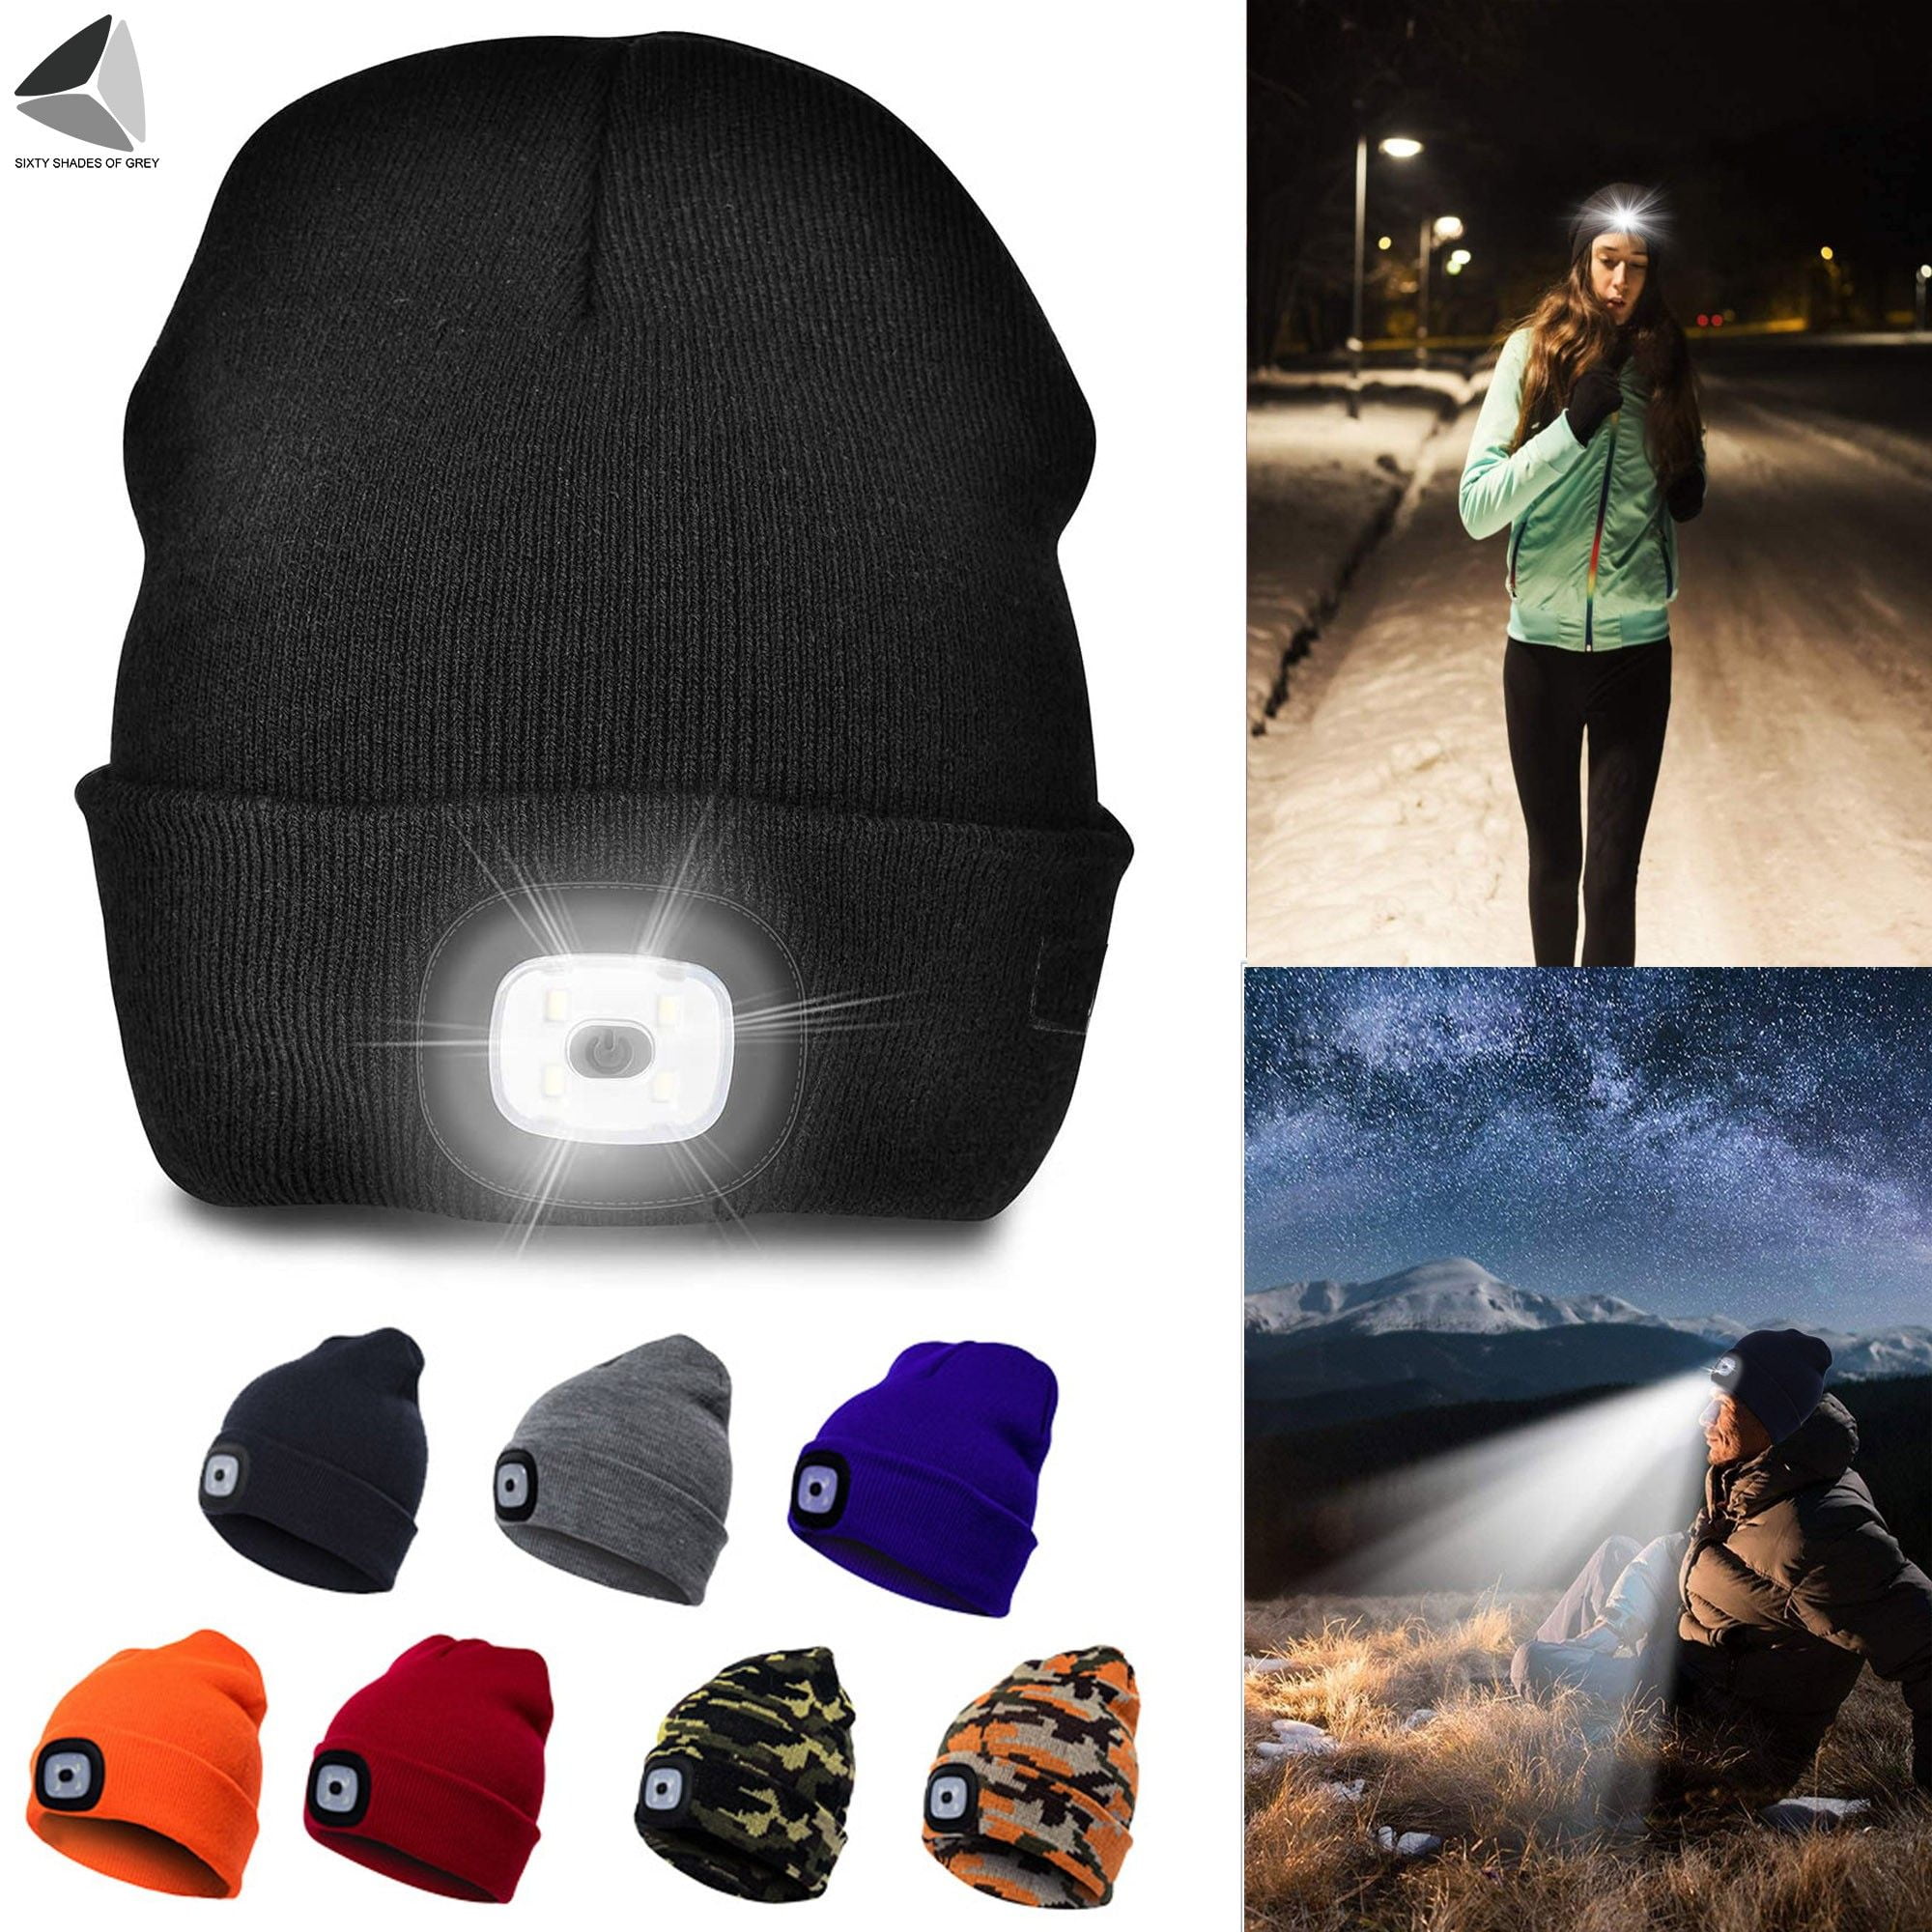 5 LED Sports Running Knitted Beanie Cap Headlamp Head Light Flashlight Torch Hat 